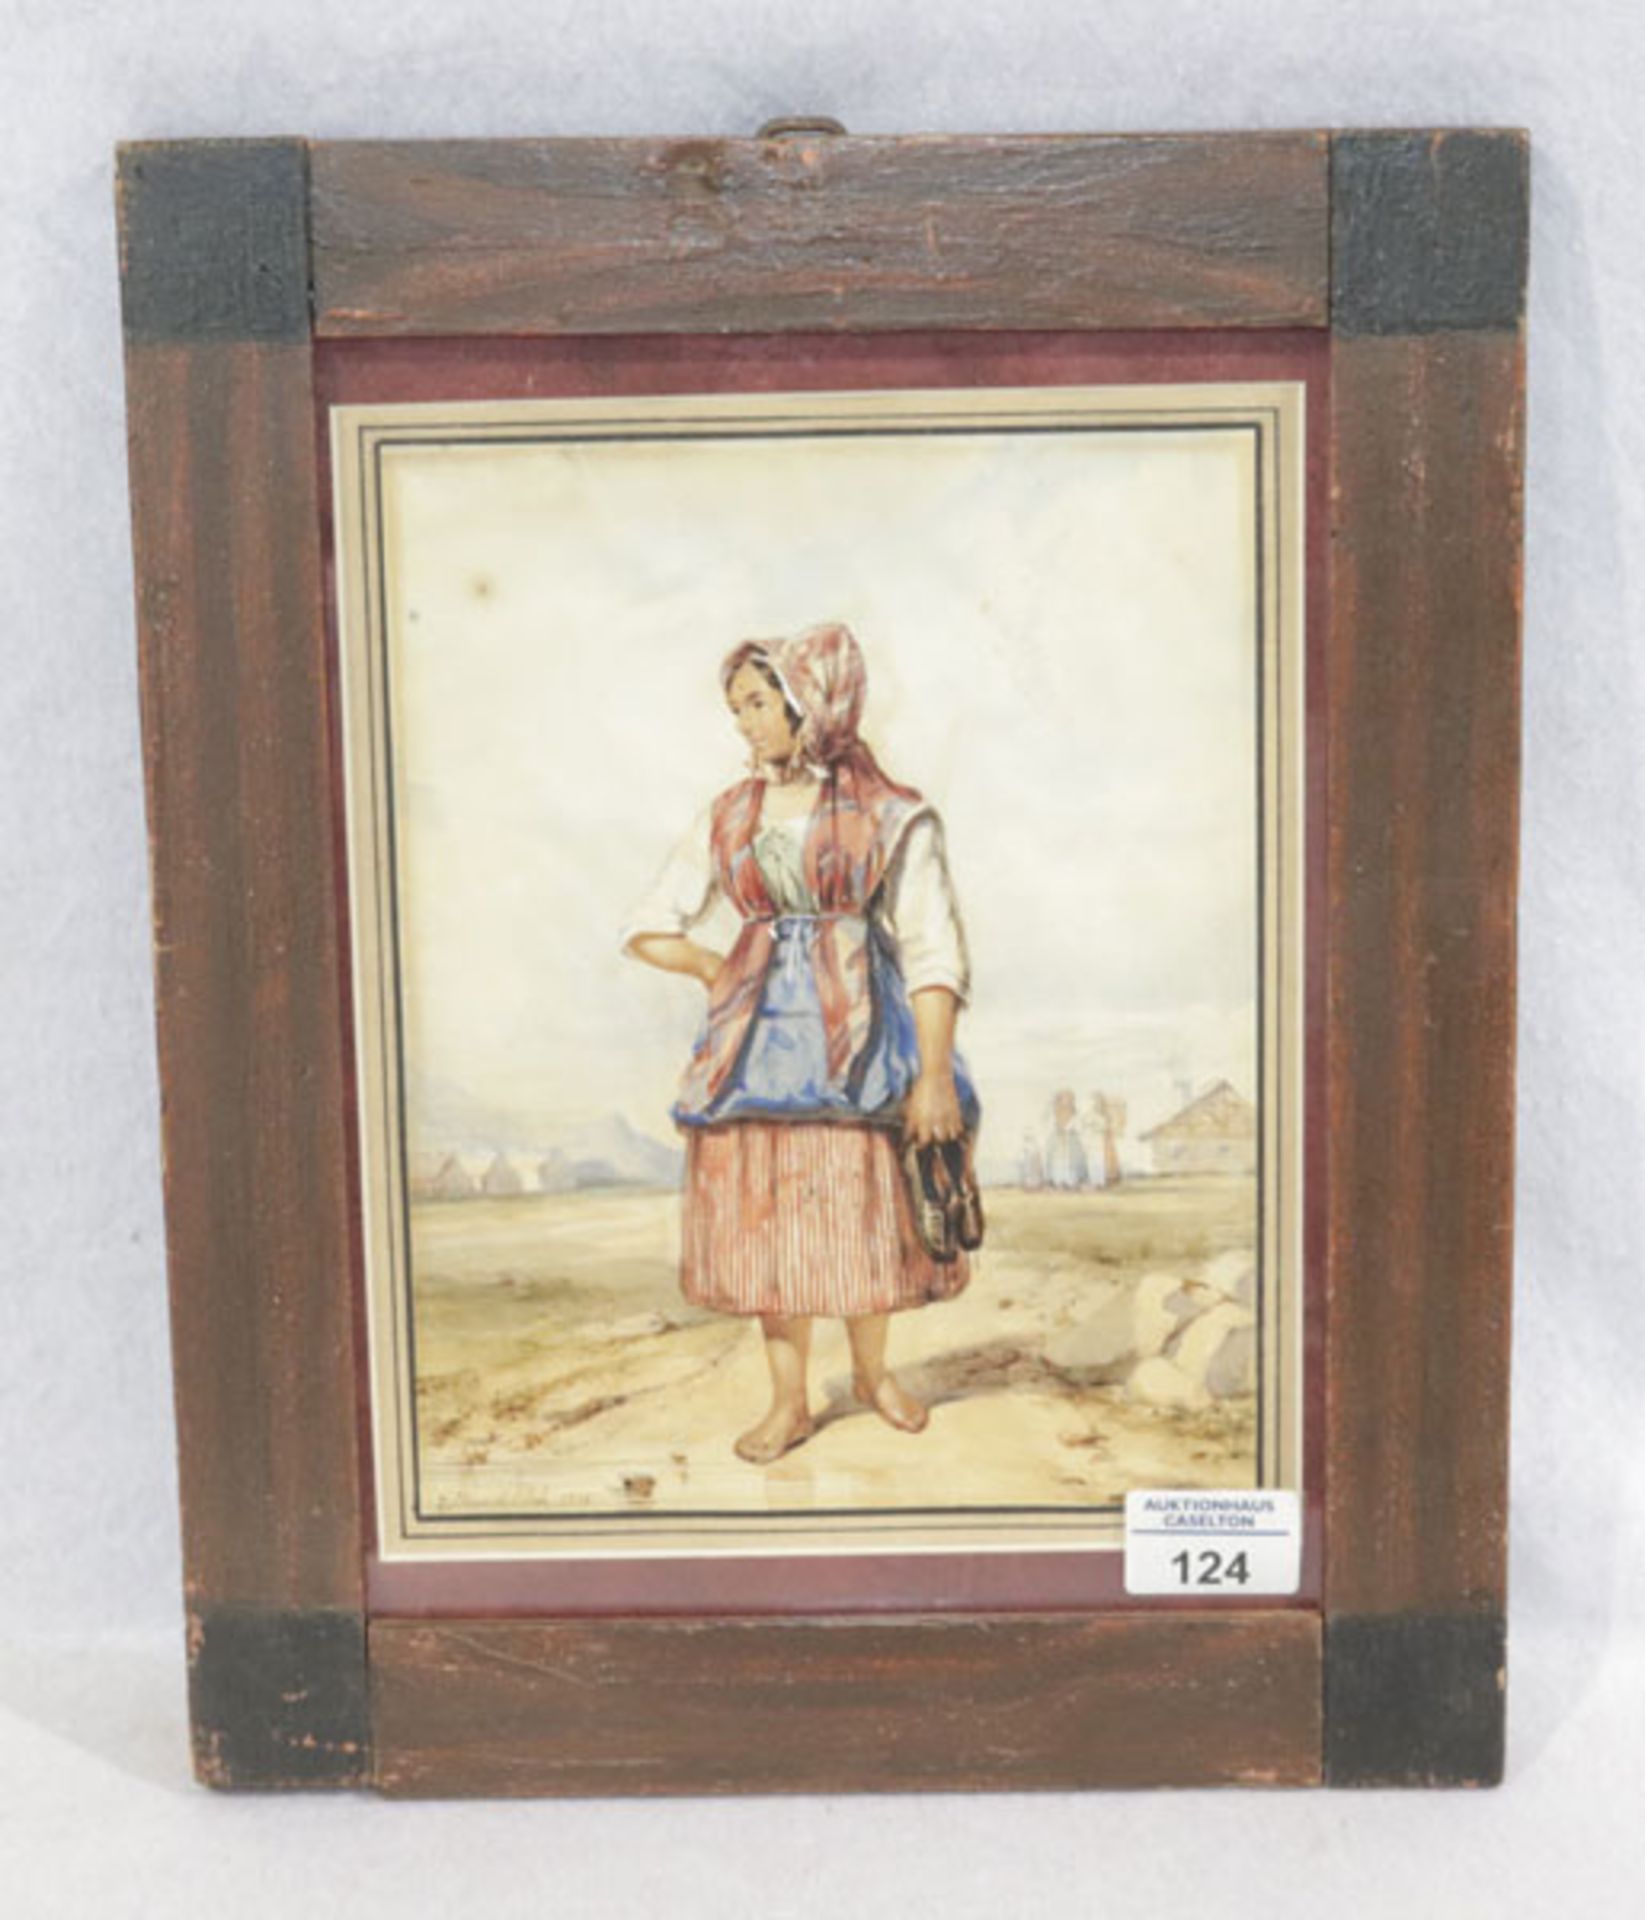 Aquarell 'Mädchen in Tracht', signiert G. Mandelsohn, datiert 1838, Blatt fleckig und wellig,